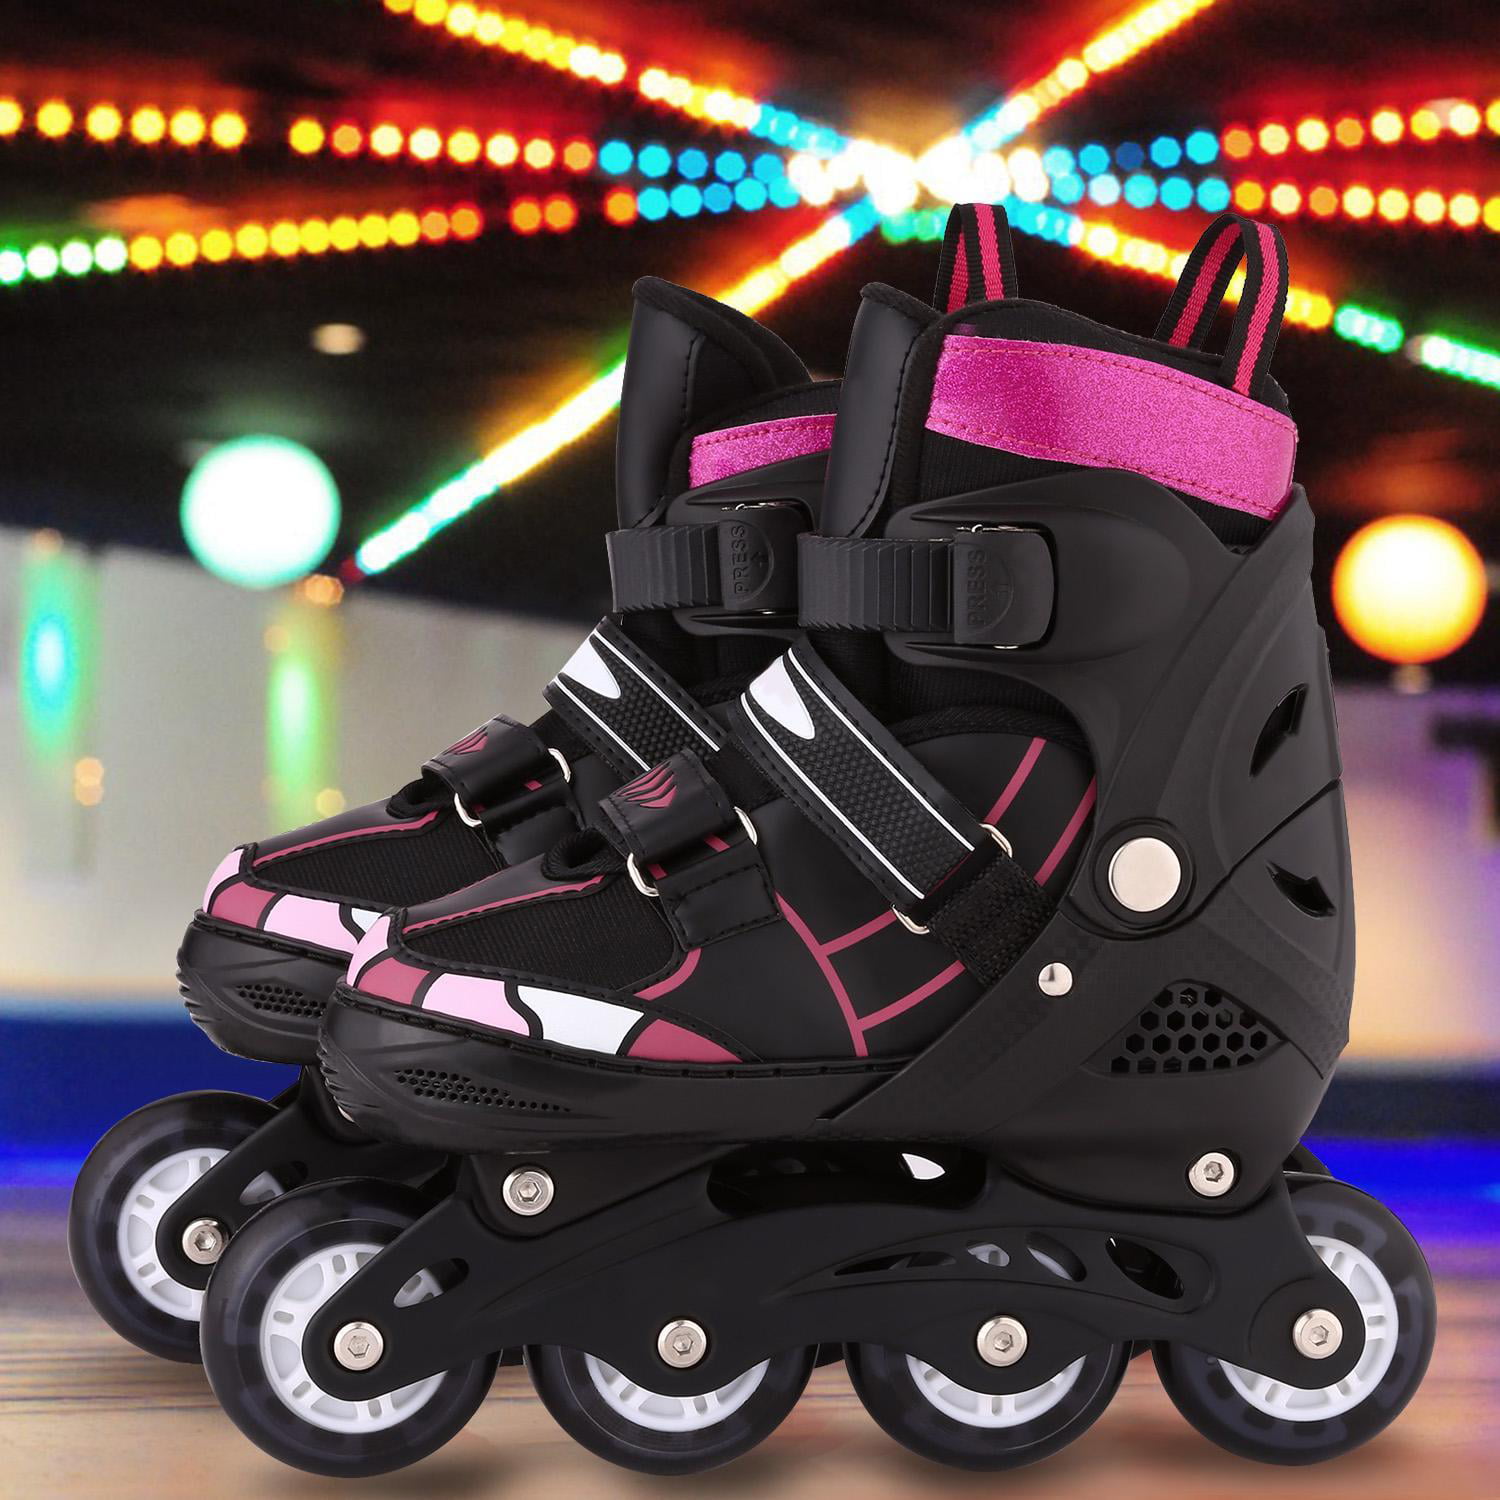 4 Size Adjustable Indoor Outdoor Rollerskates for Little Kids Boy Beginners DIKASHI Roller Skates for Boys Age 1-12 with Light Up Wheels 